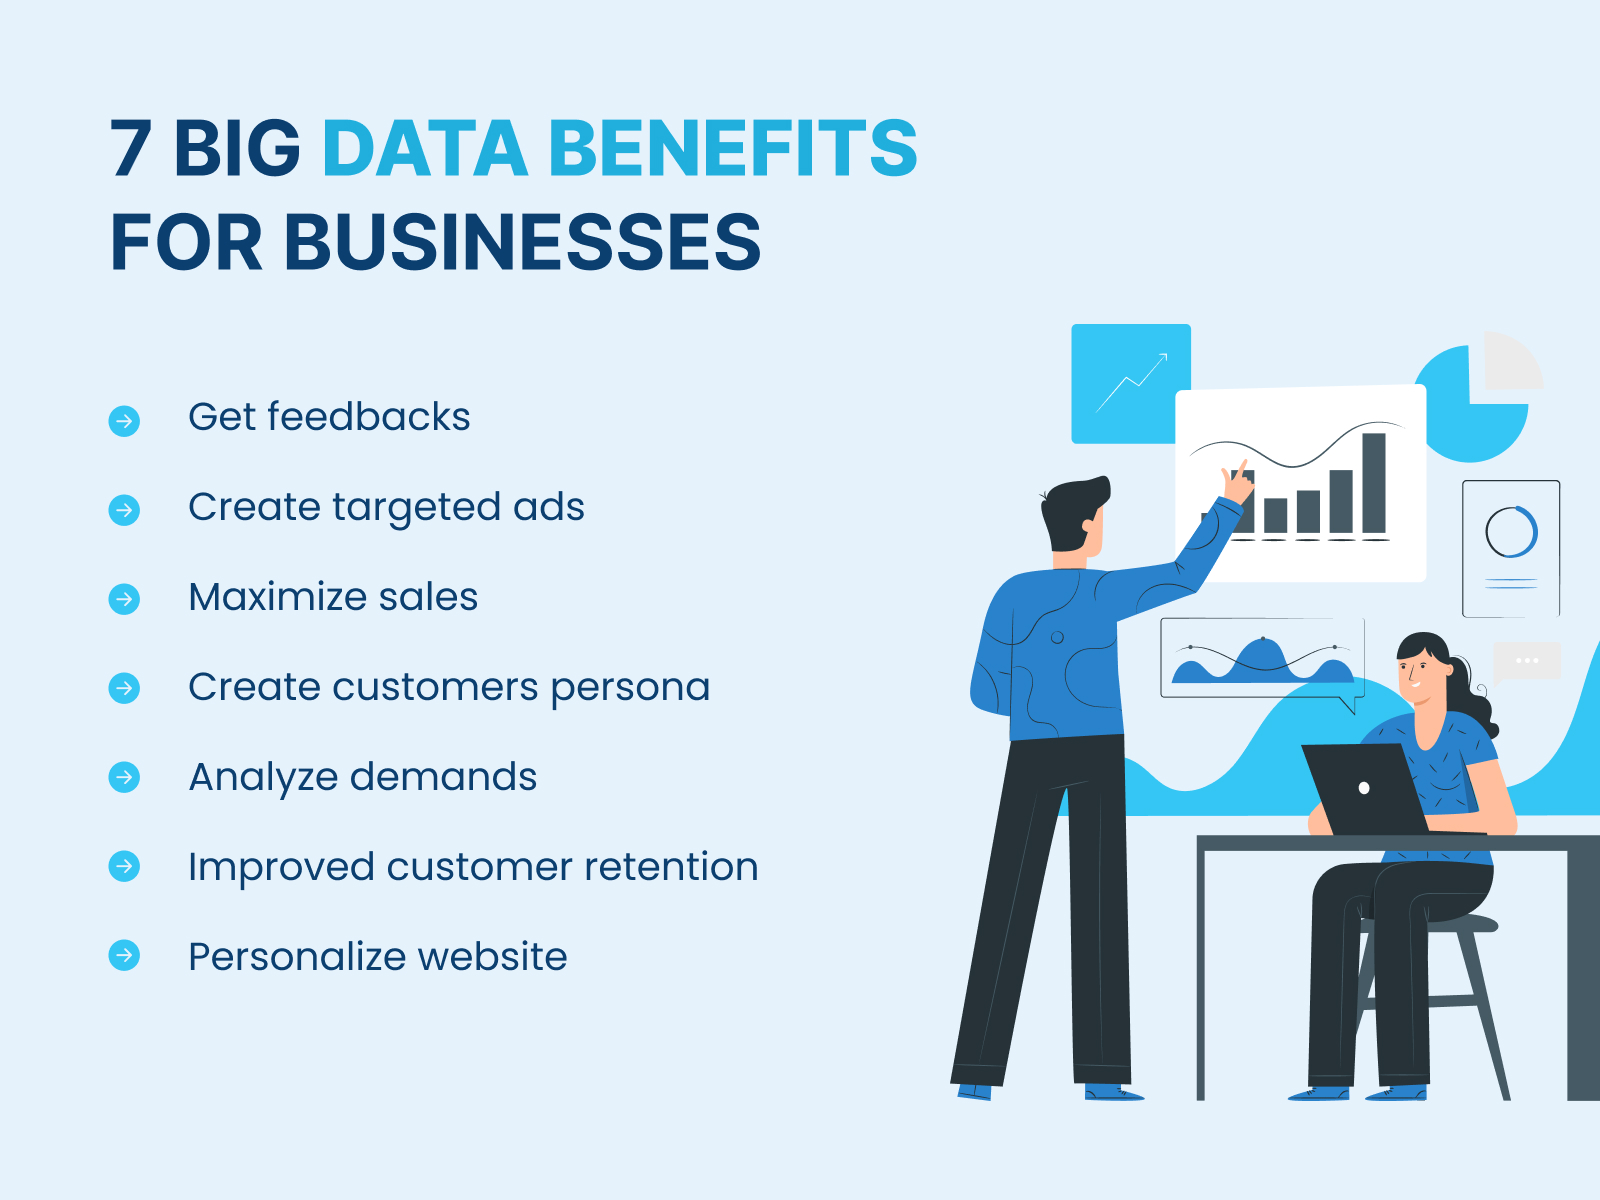 big data benefits